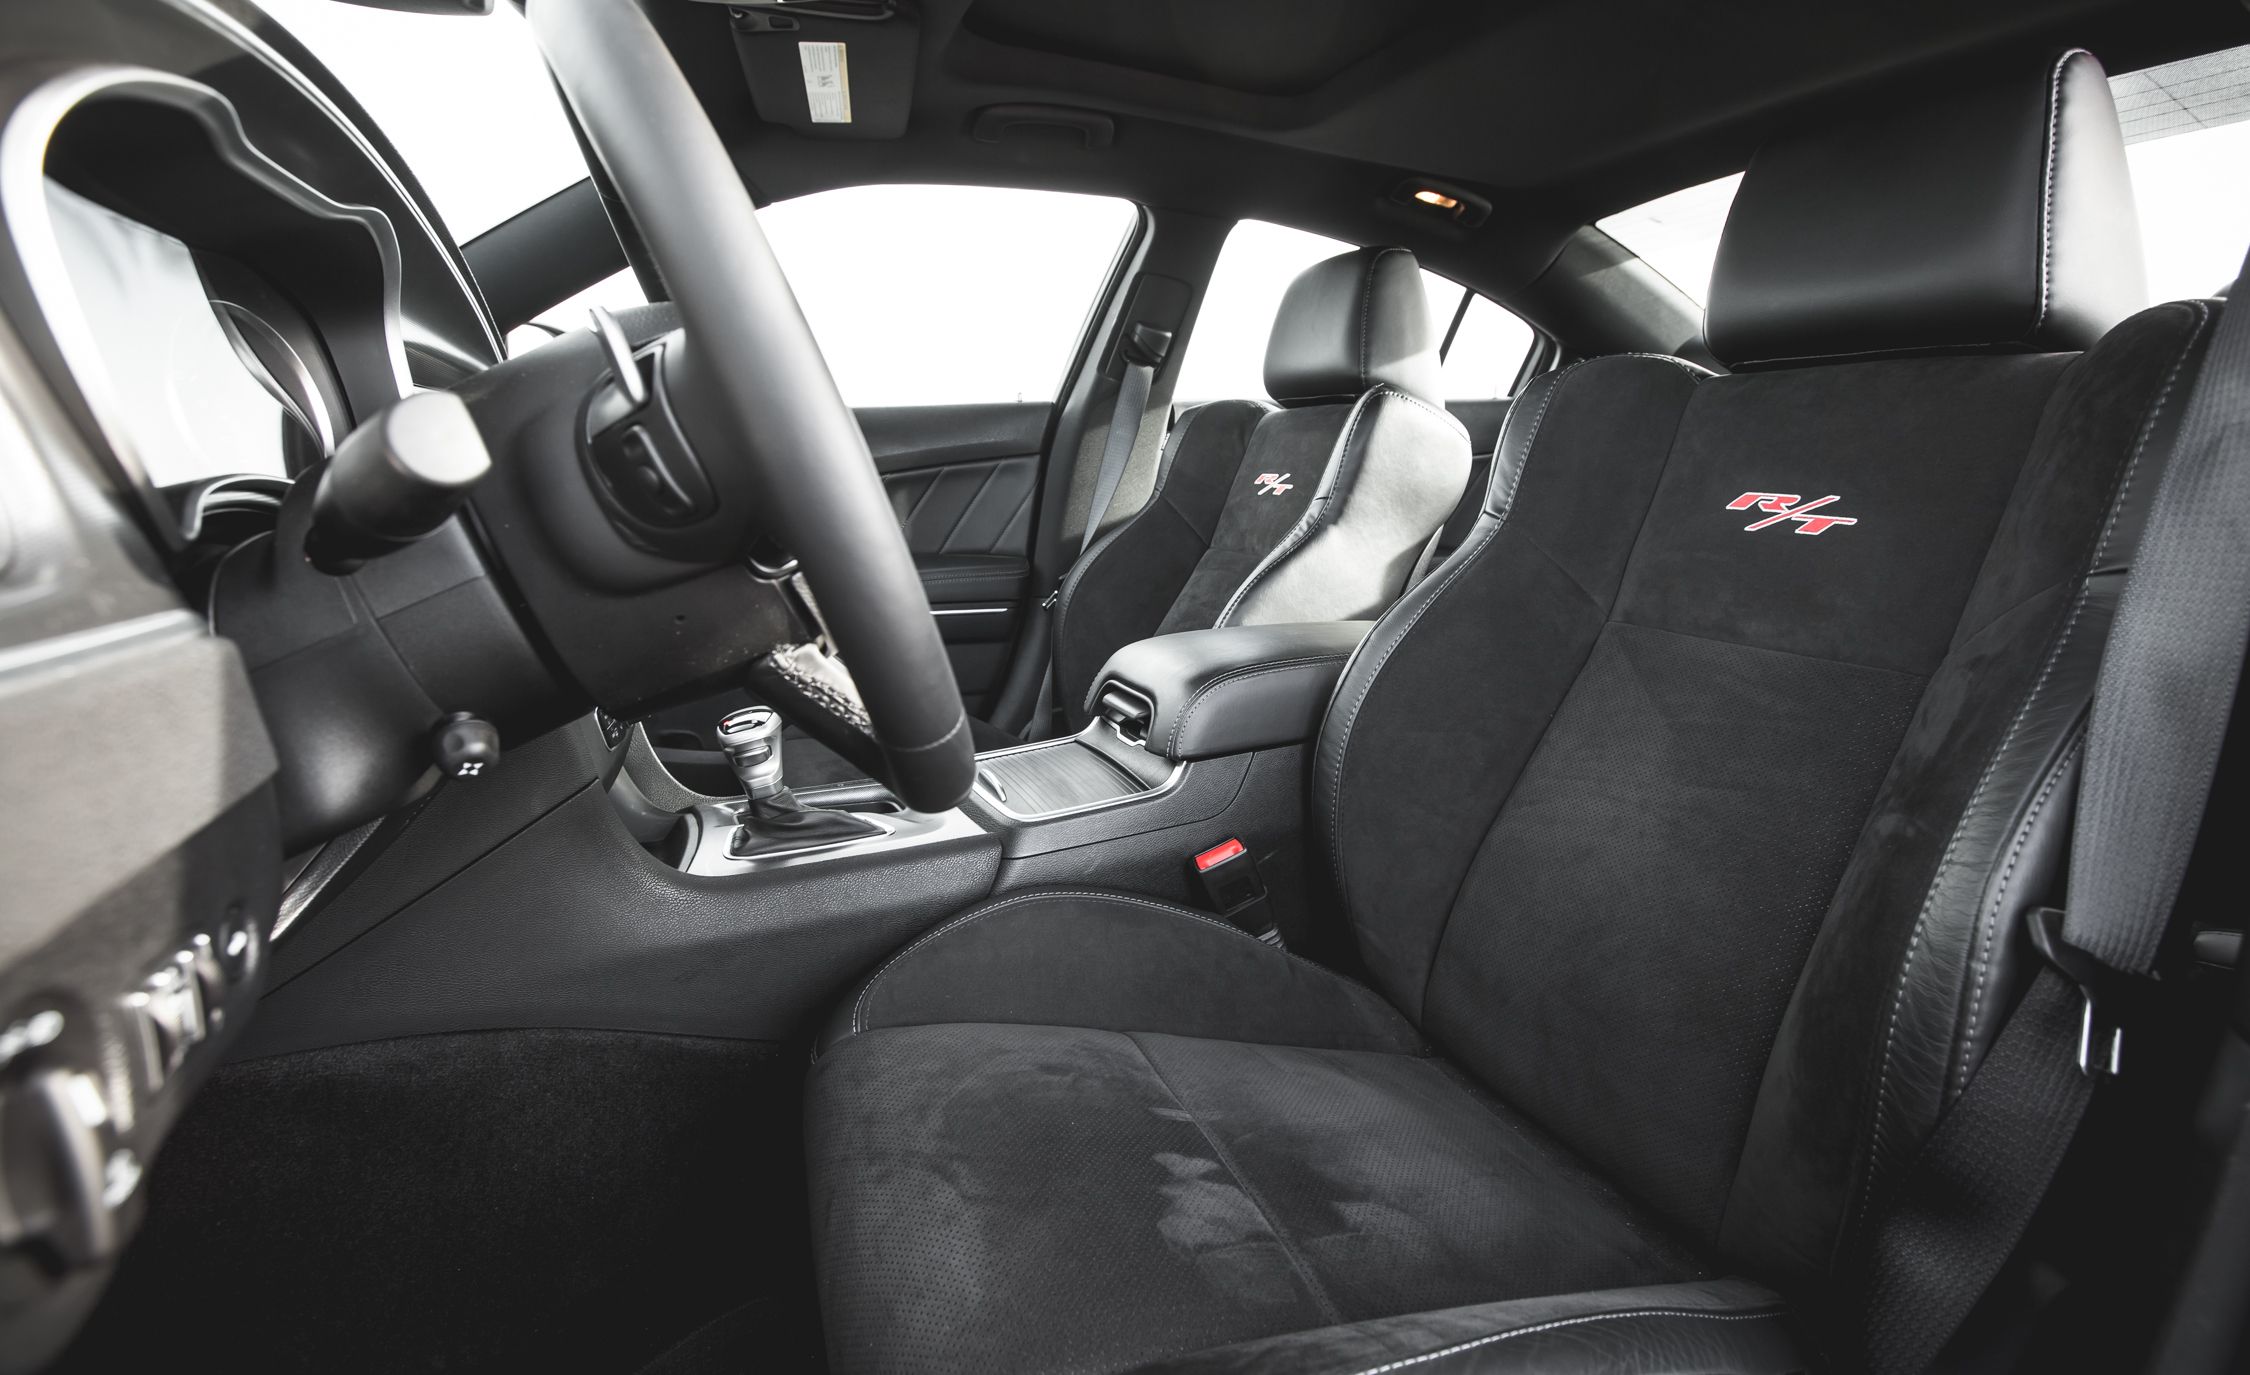 2016 Dodge Charger Interior Photos 2015 Dodge Challenger